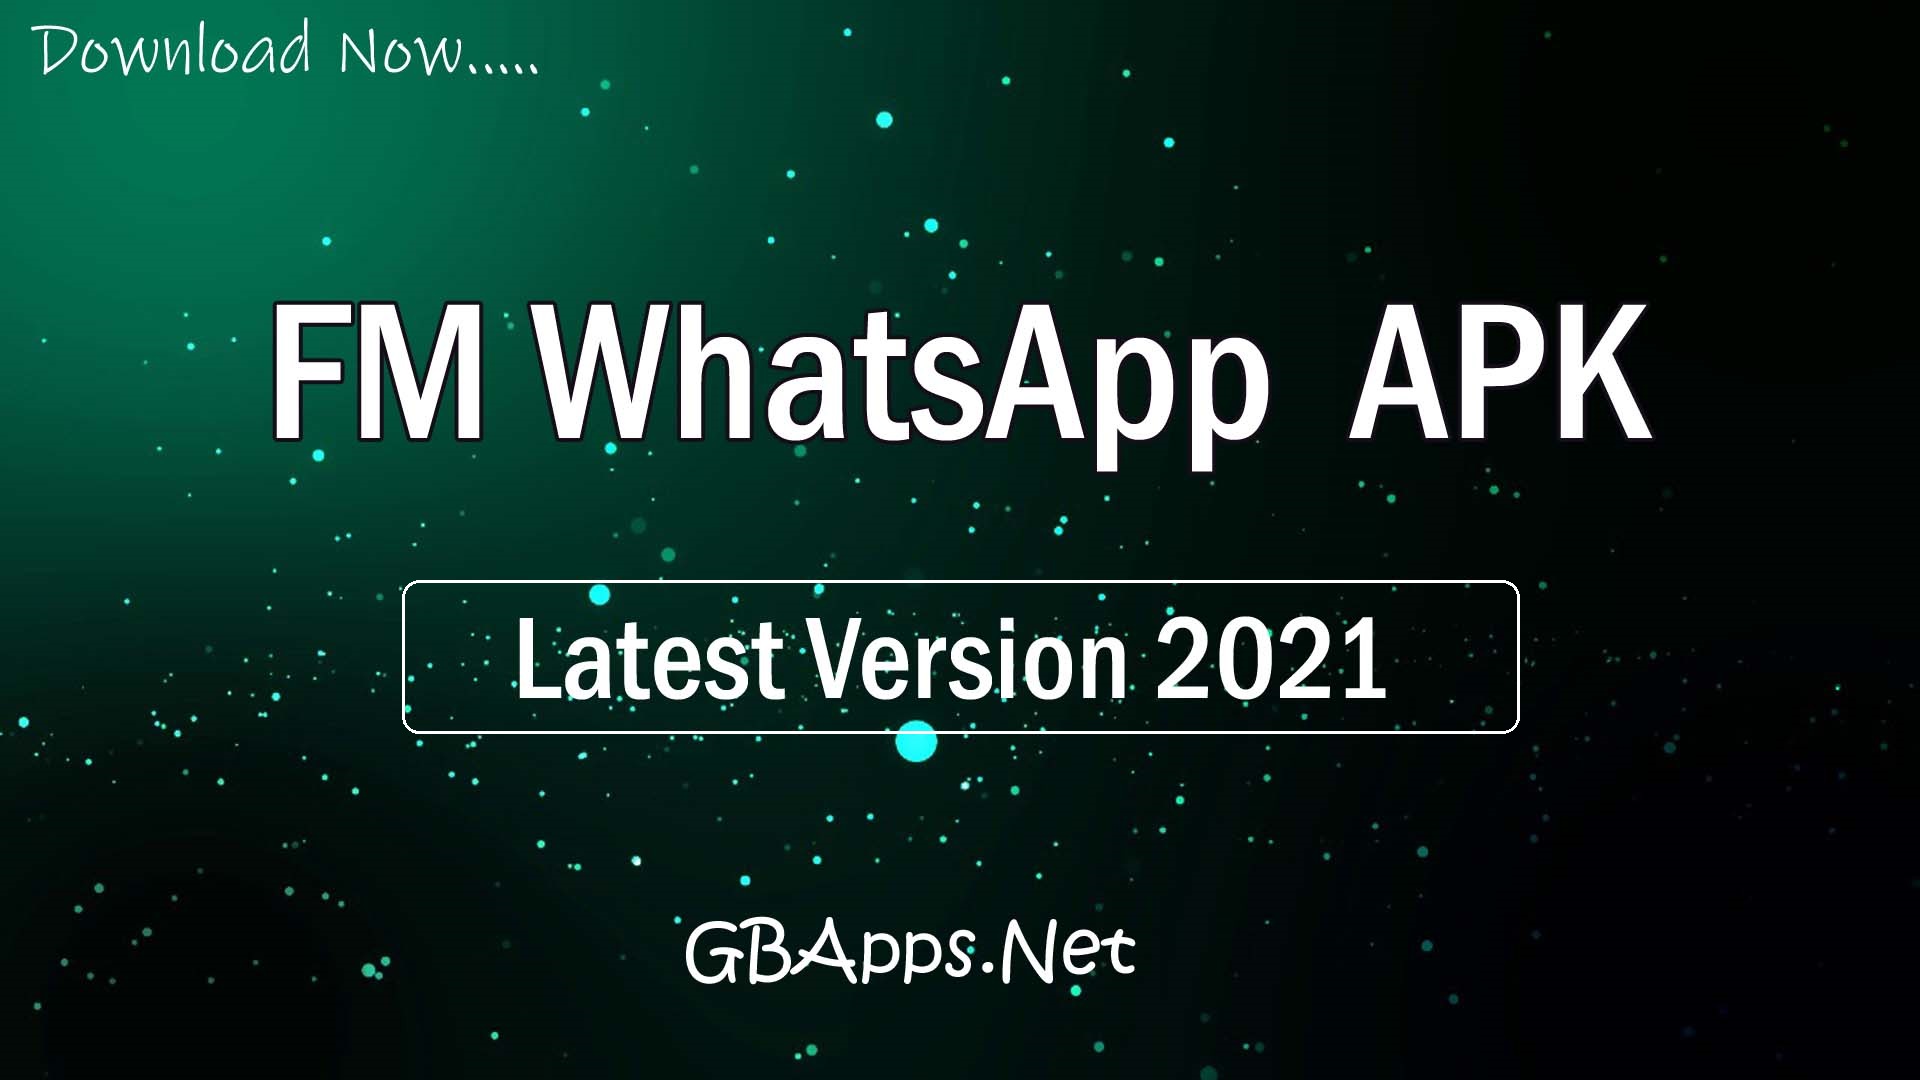 whatsapp app new version 2021 download